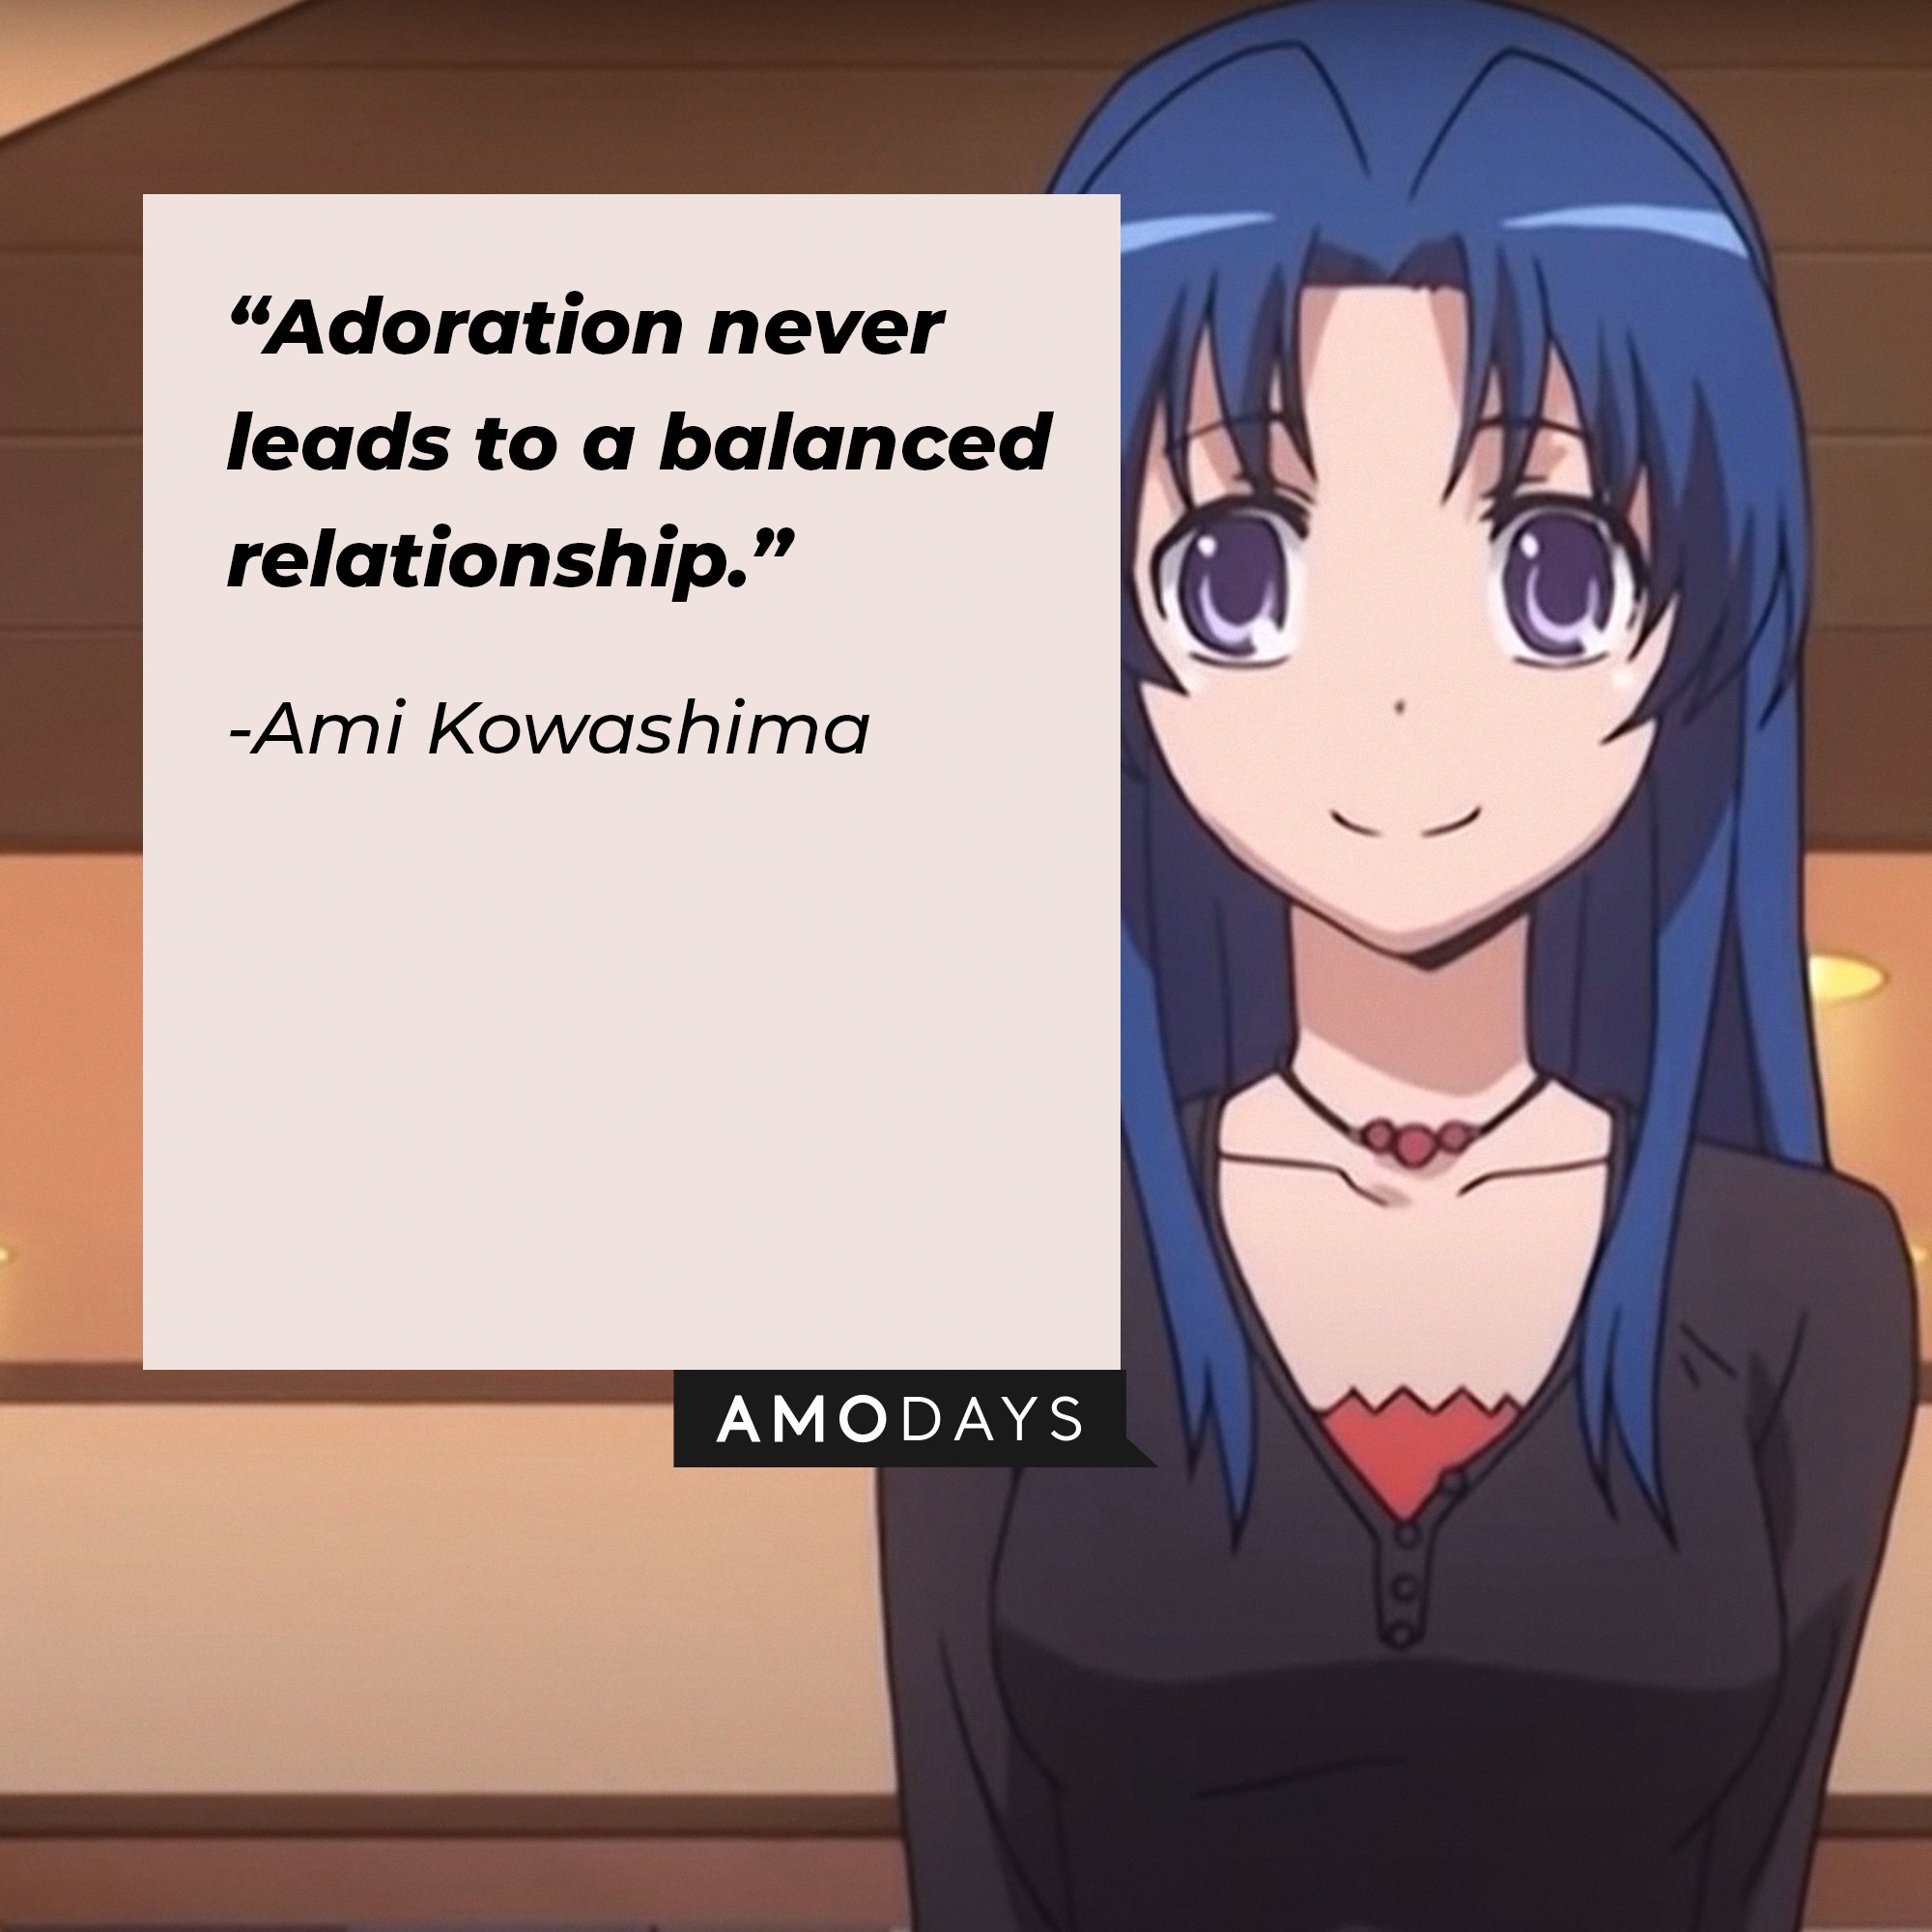 Ami Kowashima’s quote: “Adoration never leads to a balanced relationship.” | Image: AmoDays